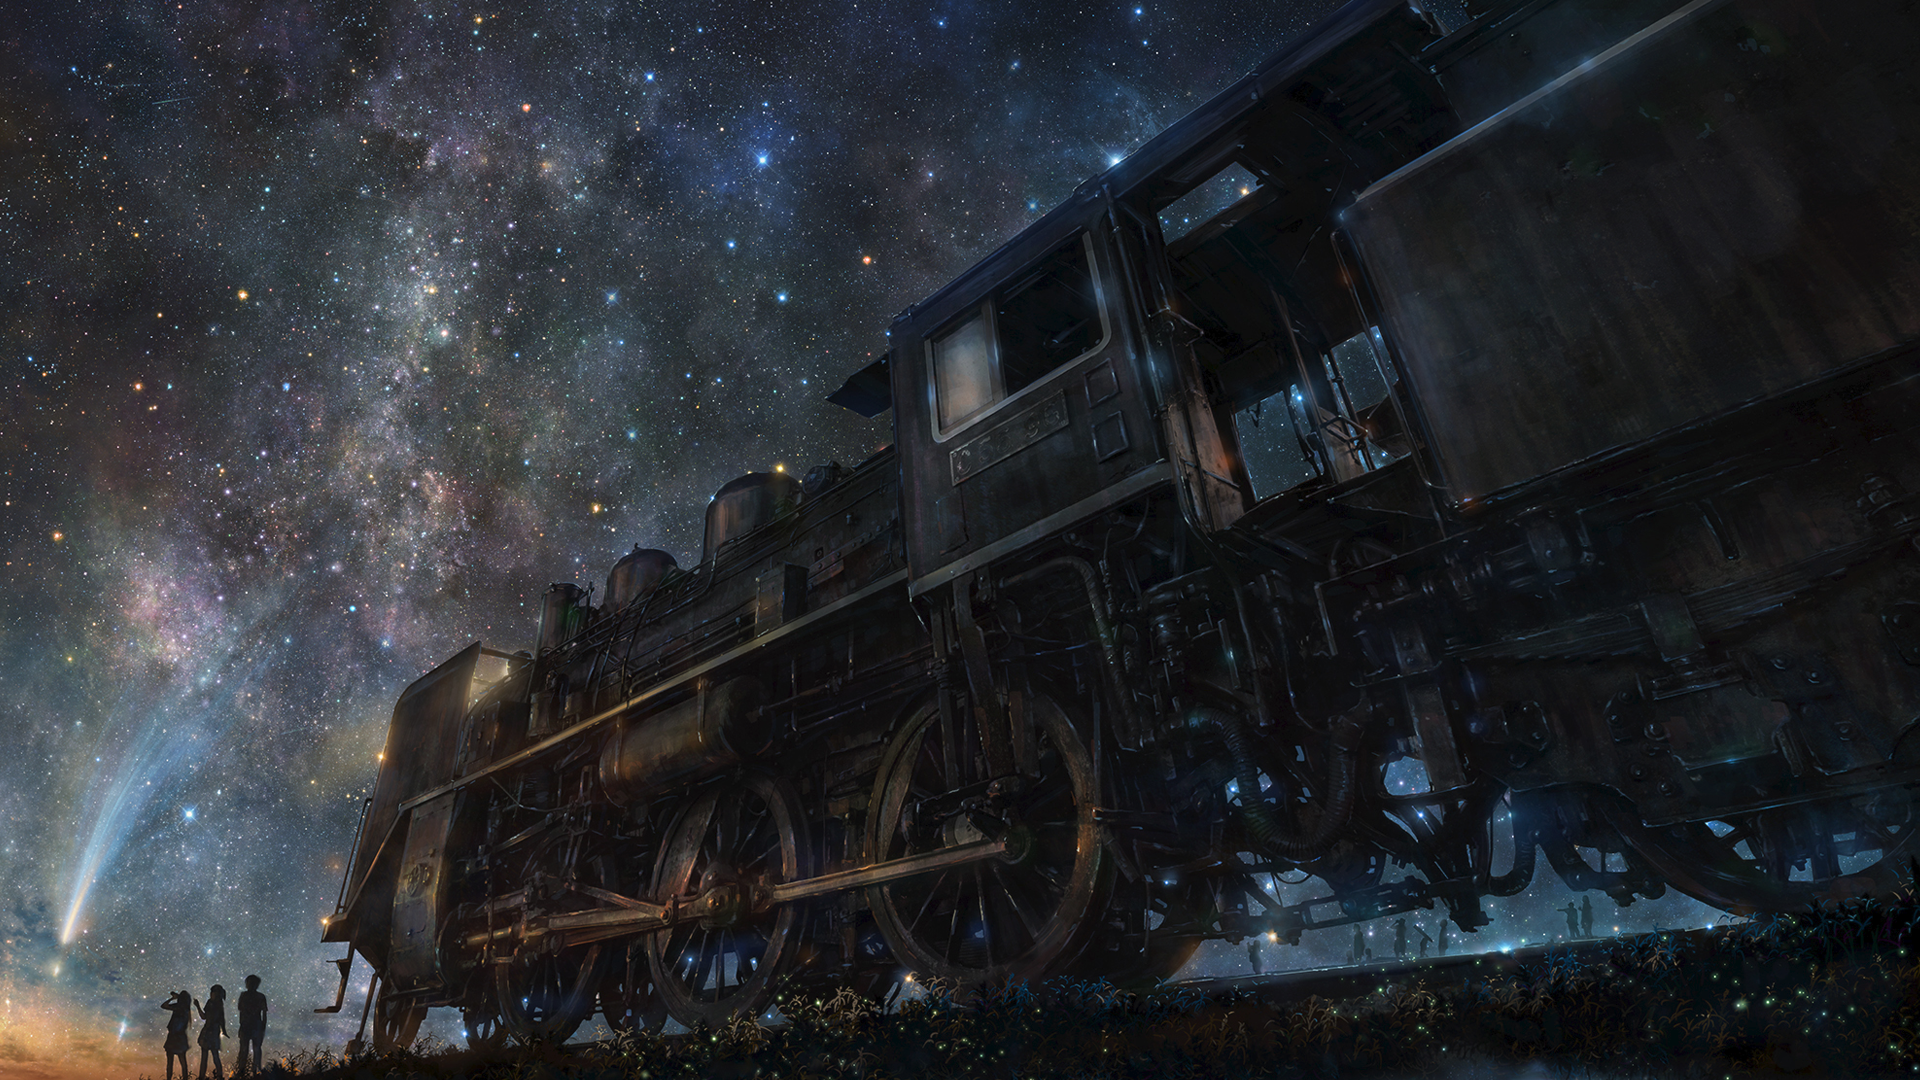 Anime 1920x1080 train vehicle night stars anime sky starry night Pixiv